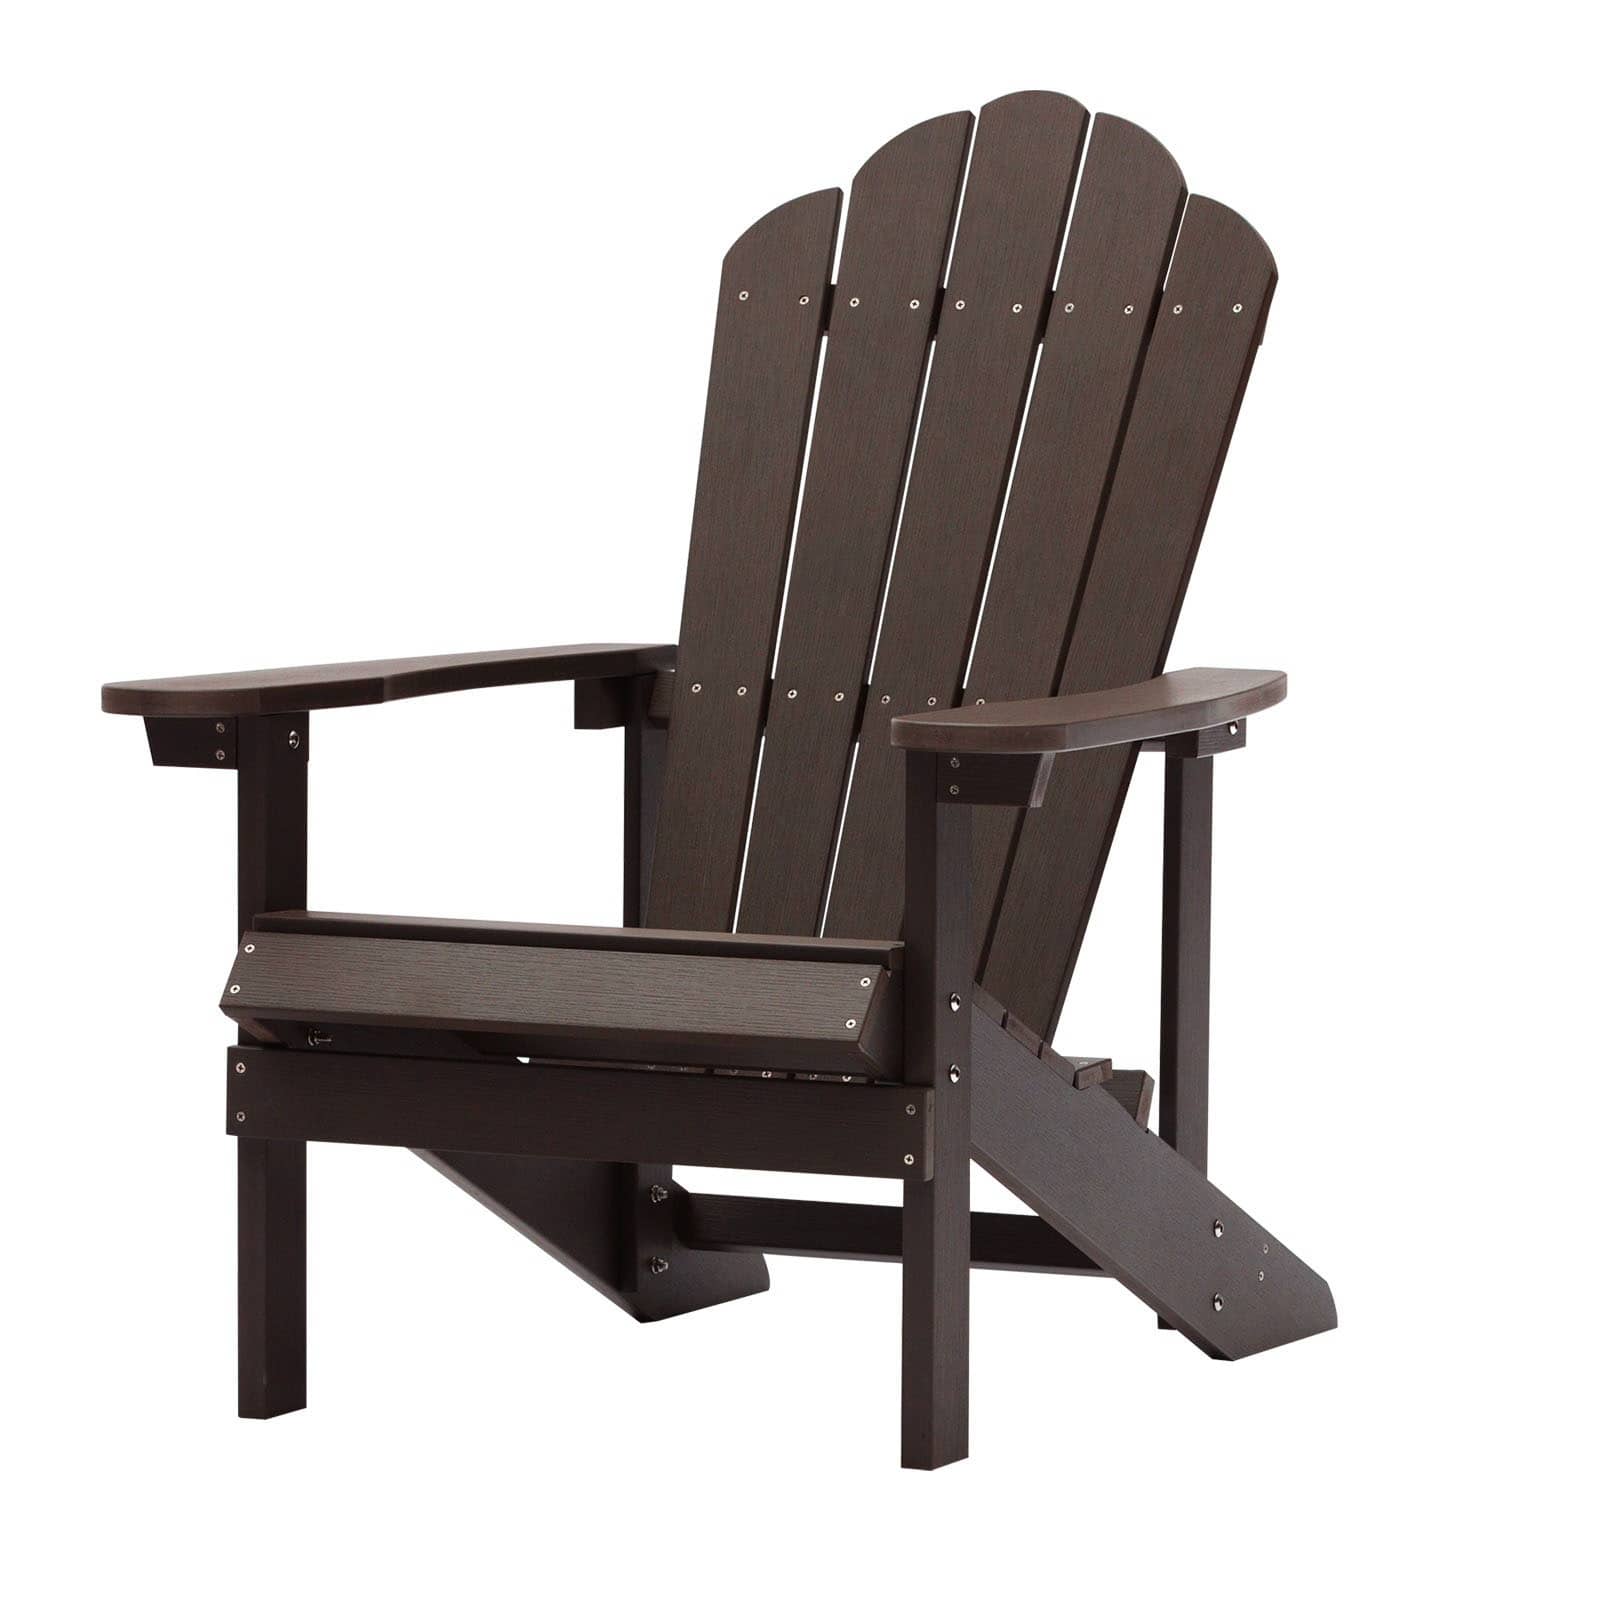 CASAINC Coffee Outdoor Patio Reclining Slat Polyethylene Plastic Adirondack Chair